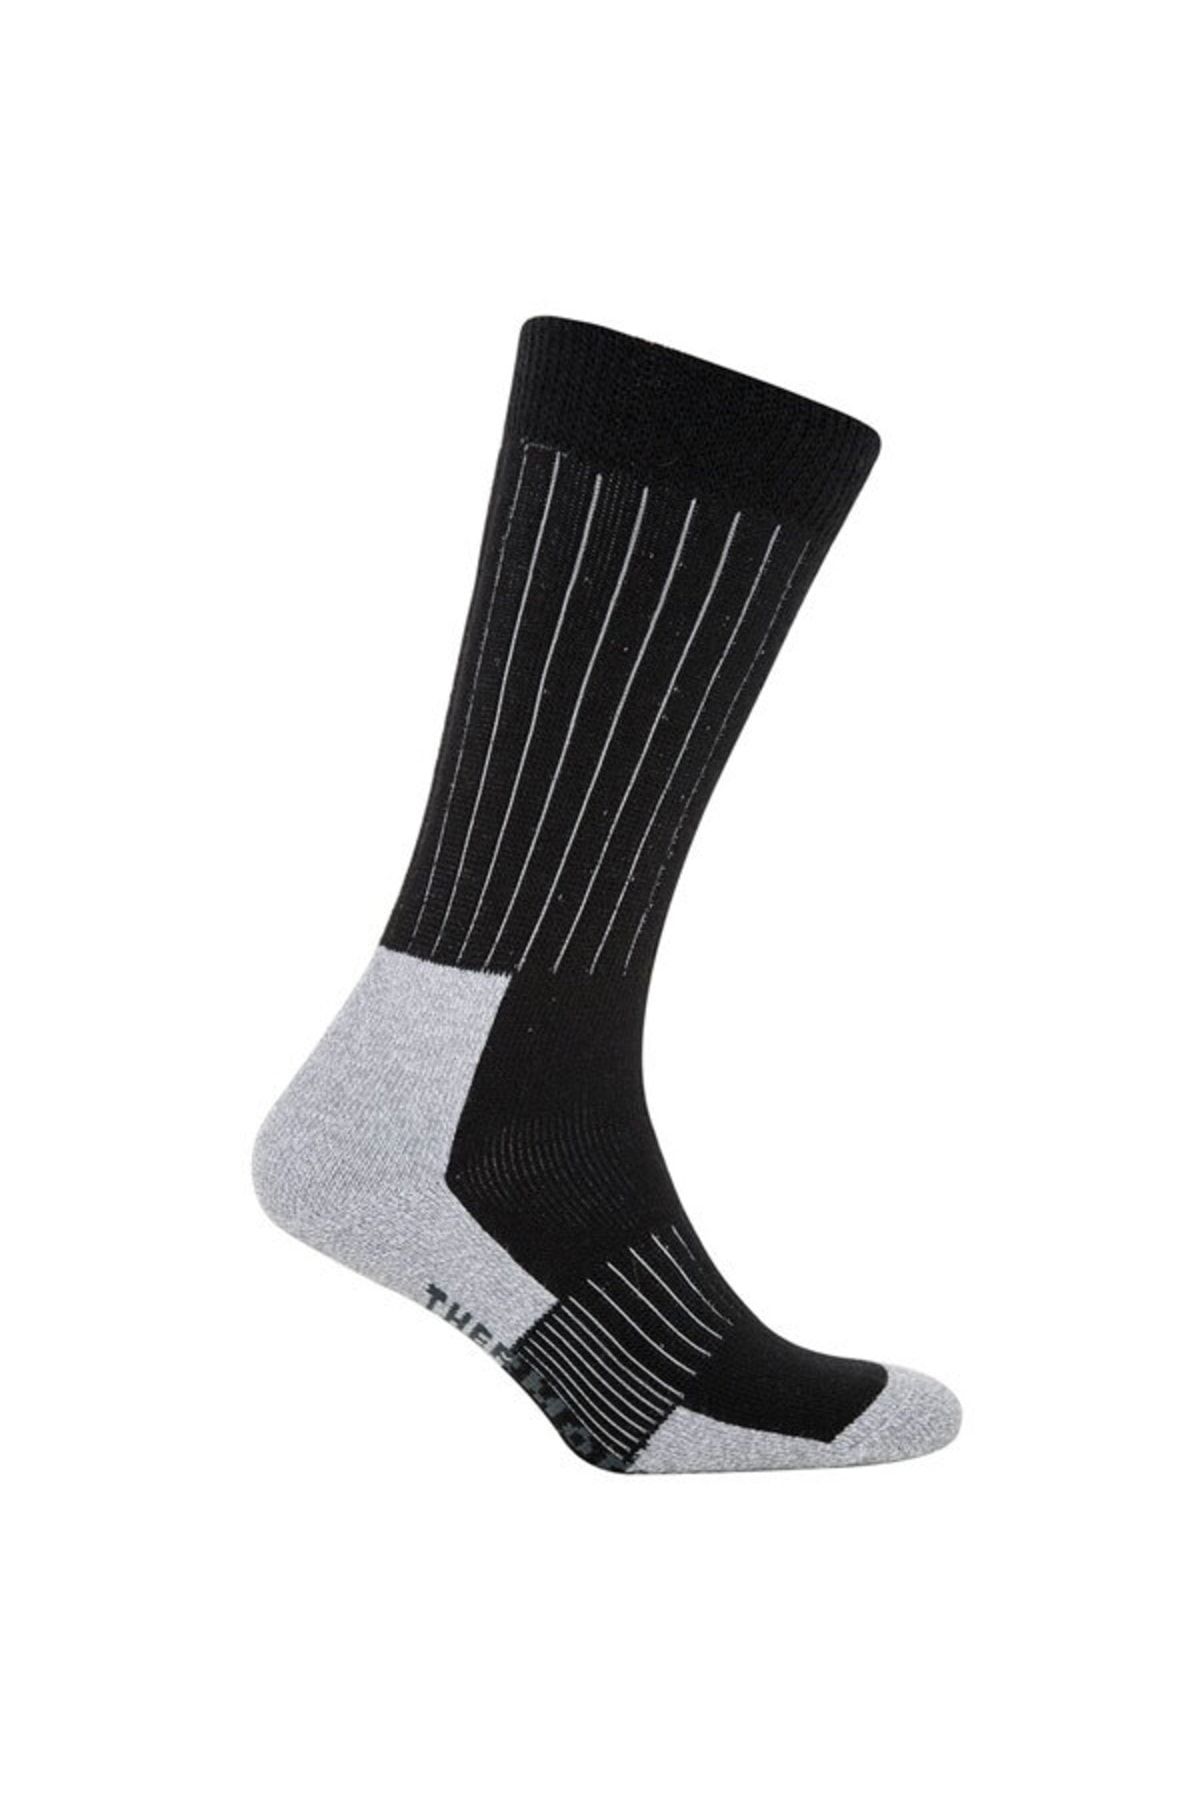 SAVAGE Hzts19 Extreme Çorap Siyah 35-38